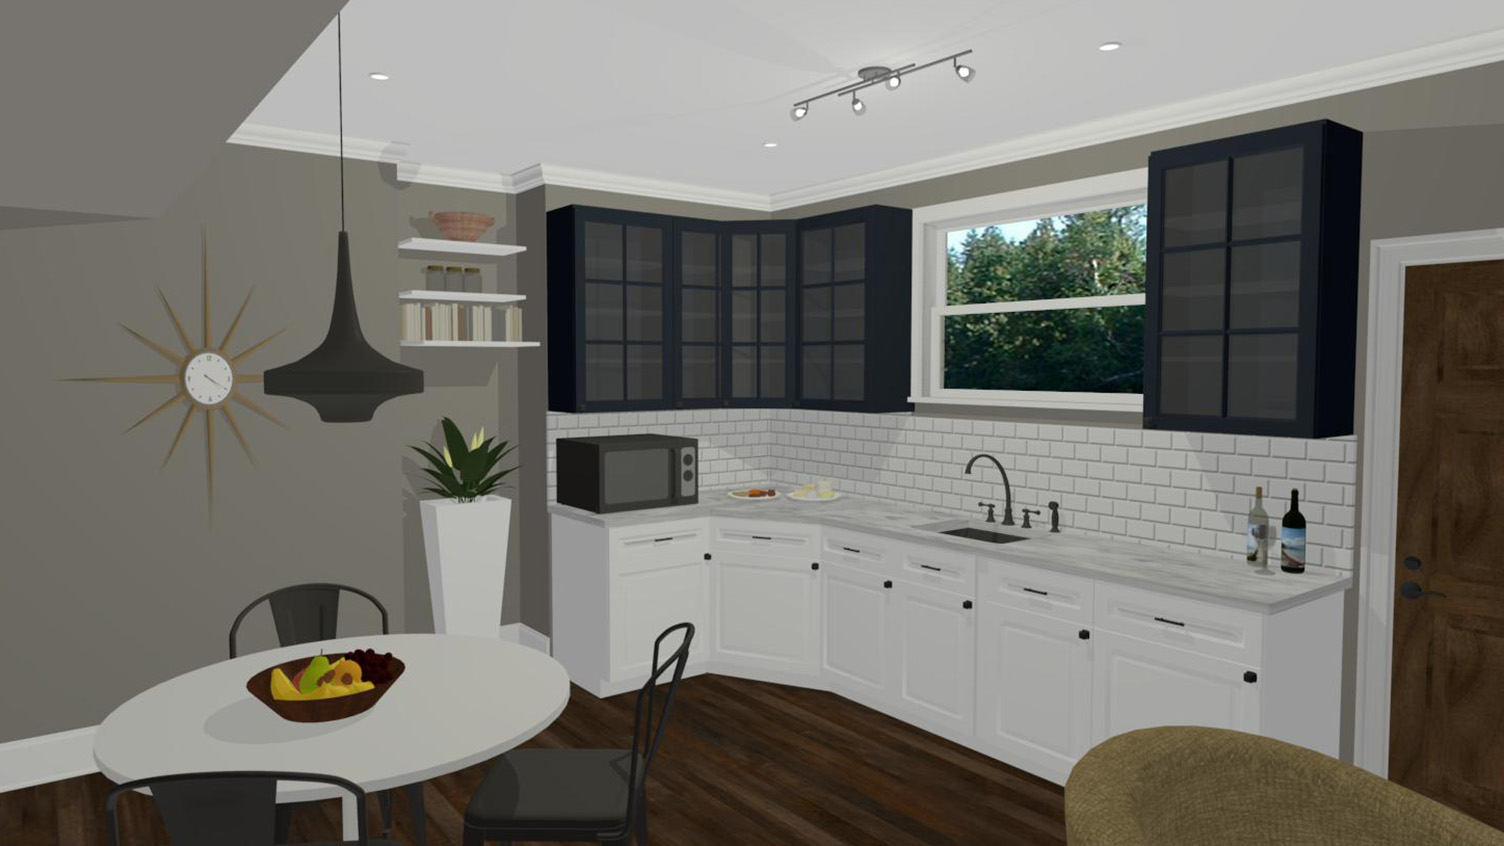 kitchen render 4_large